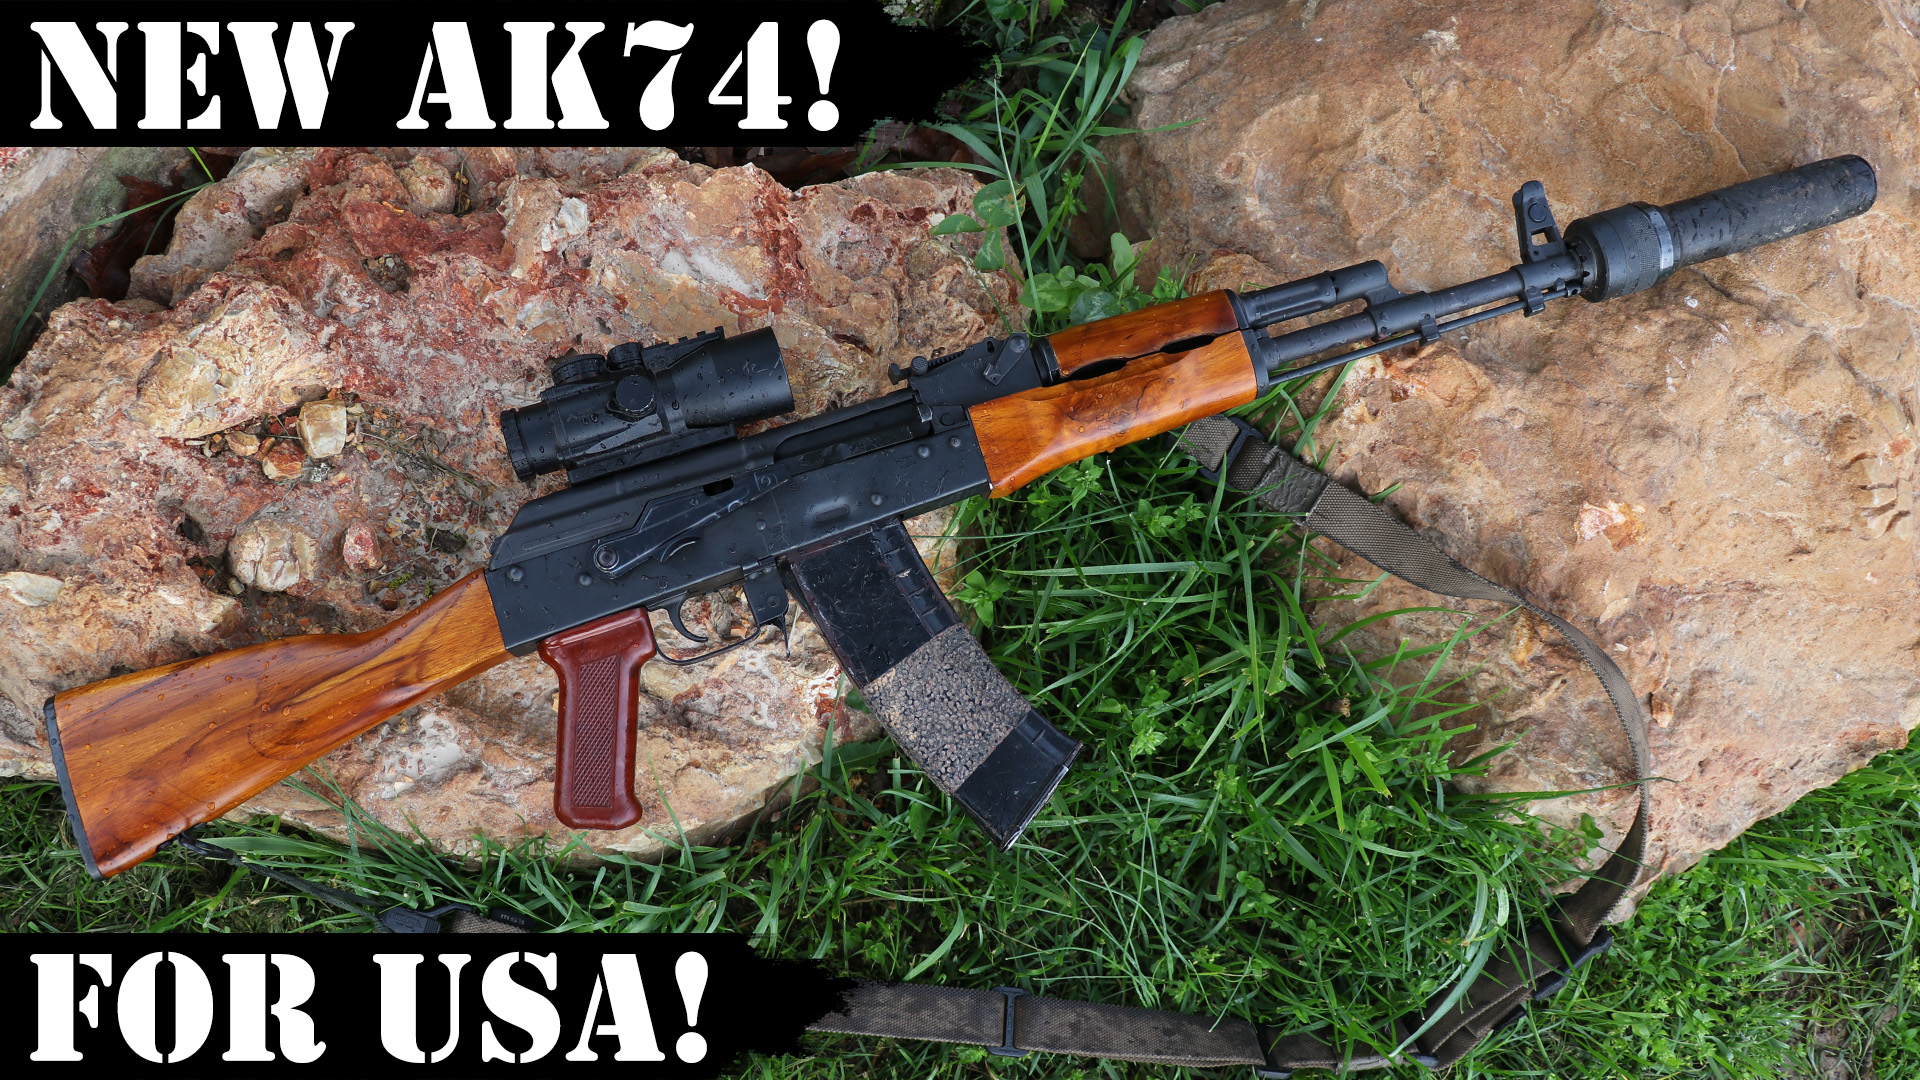 New AK74 for USA!